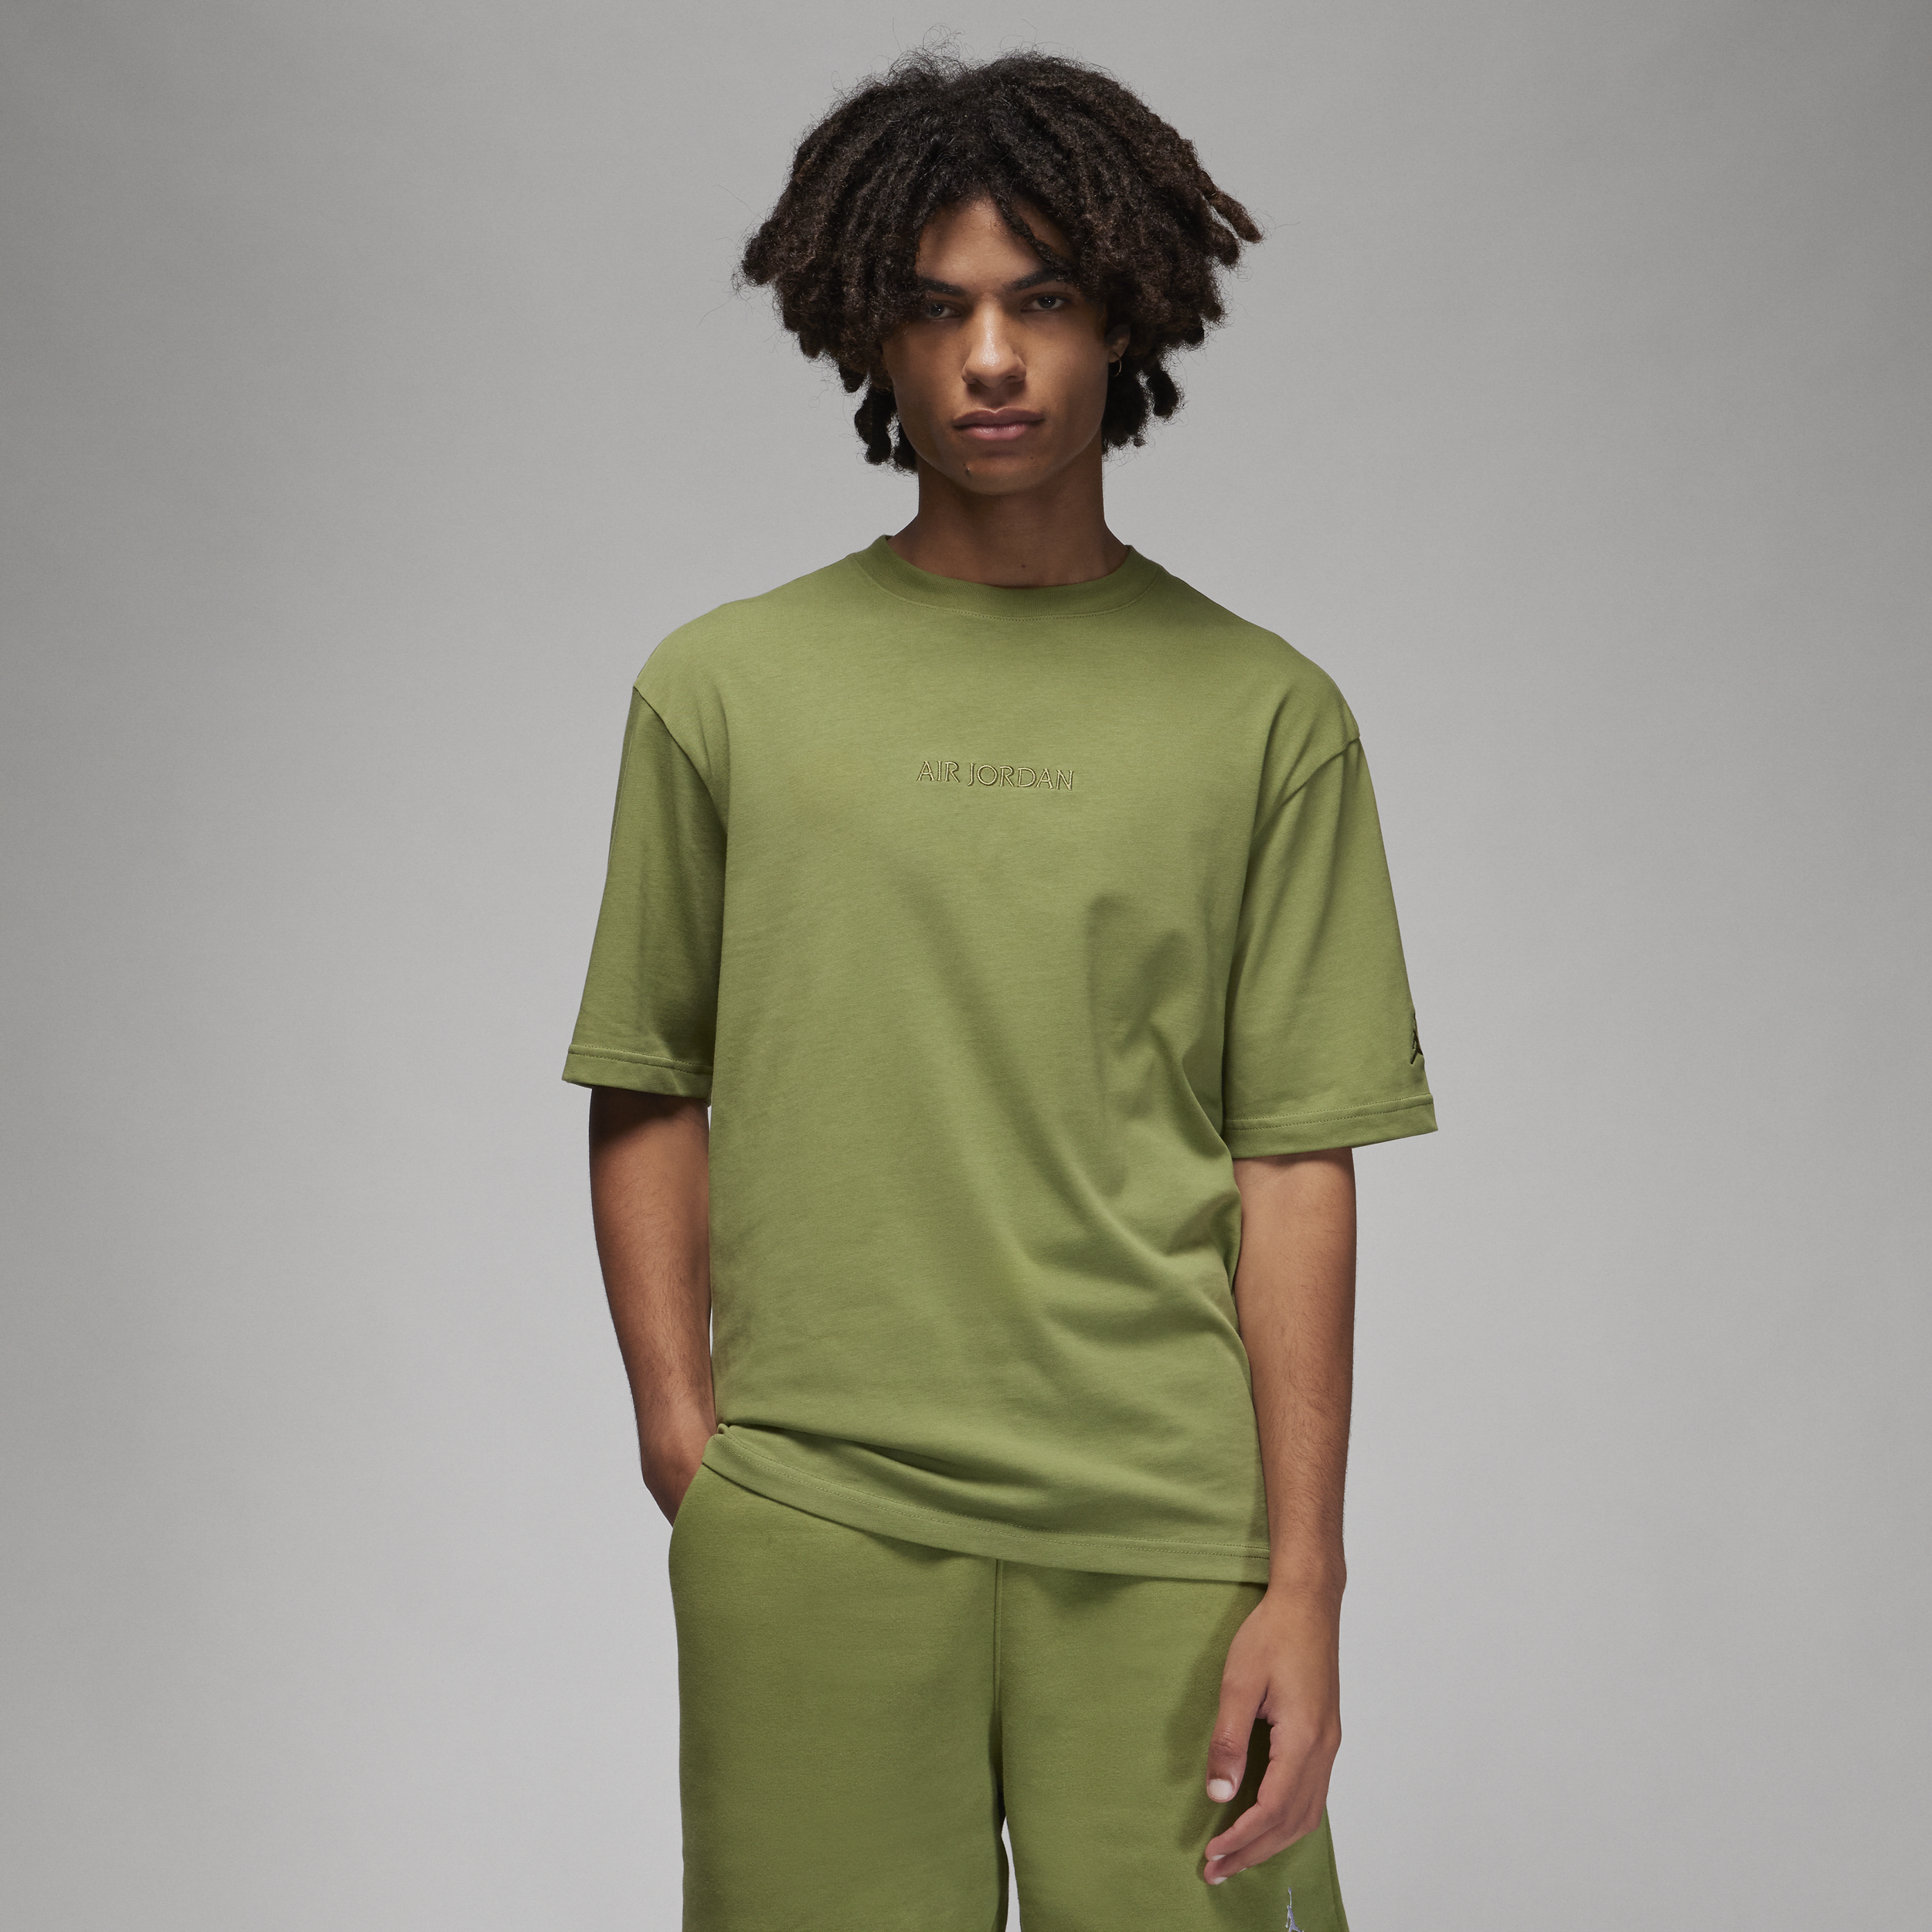 Air Jordan Wordmark Camiseta - Hombre - Verde